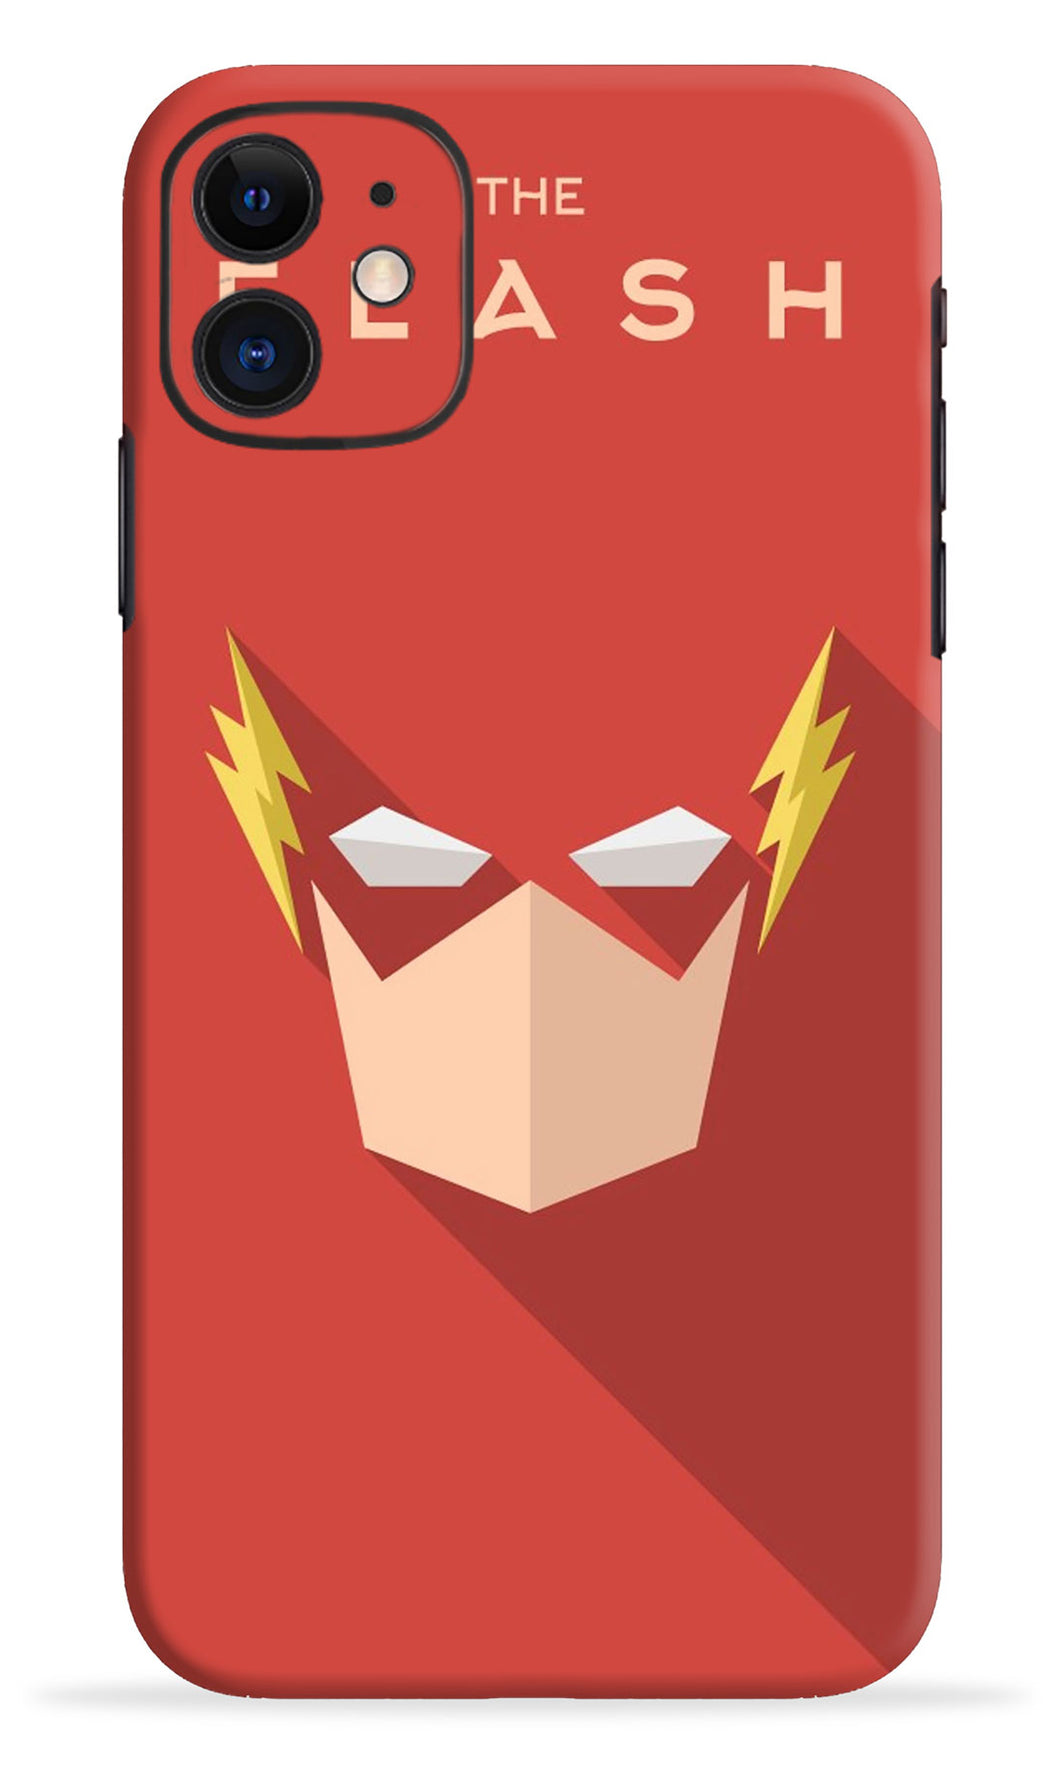 The Flash Mobile Skin